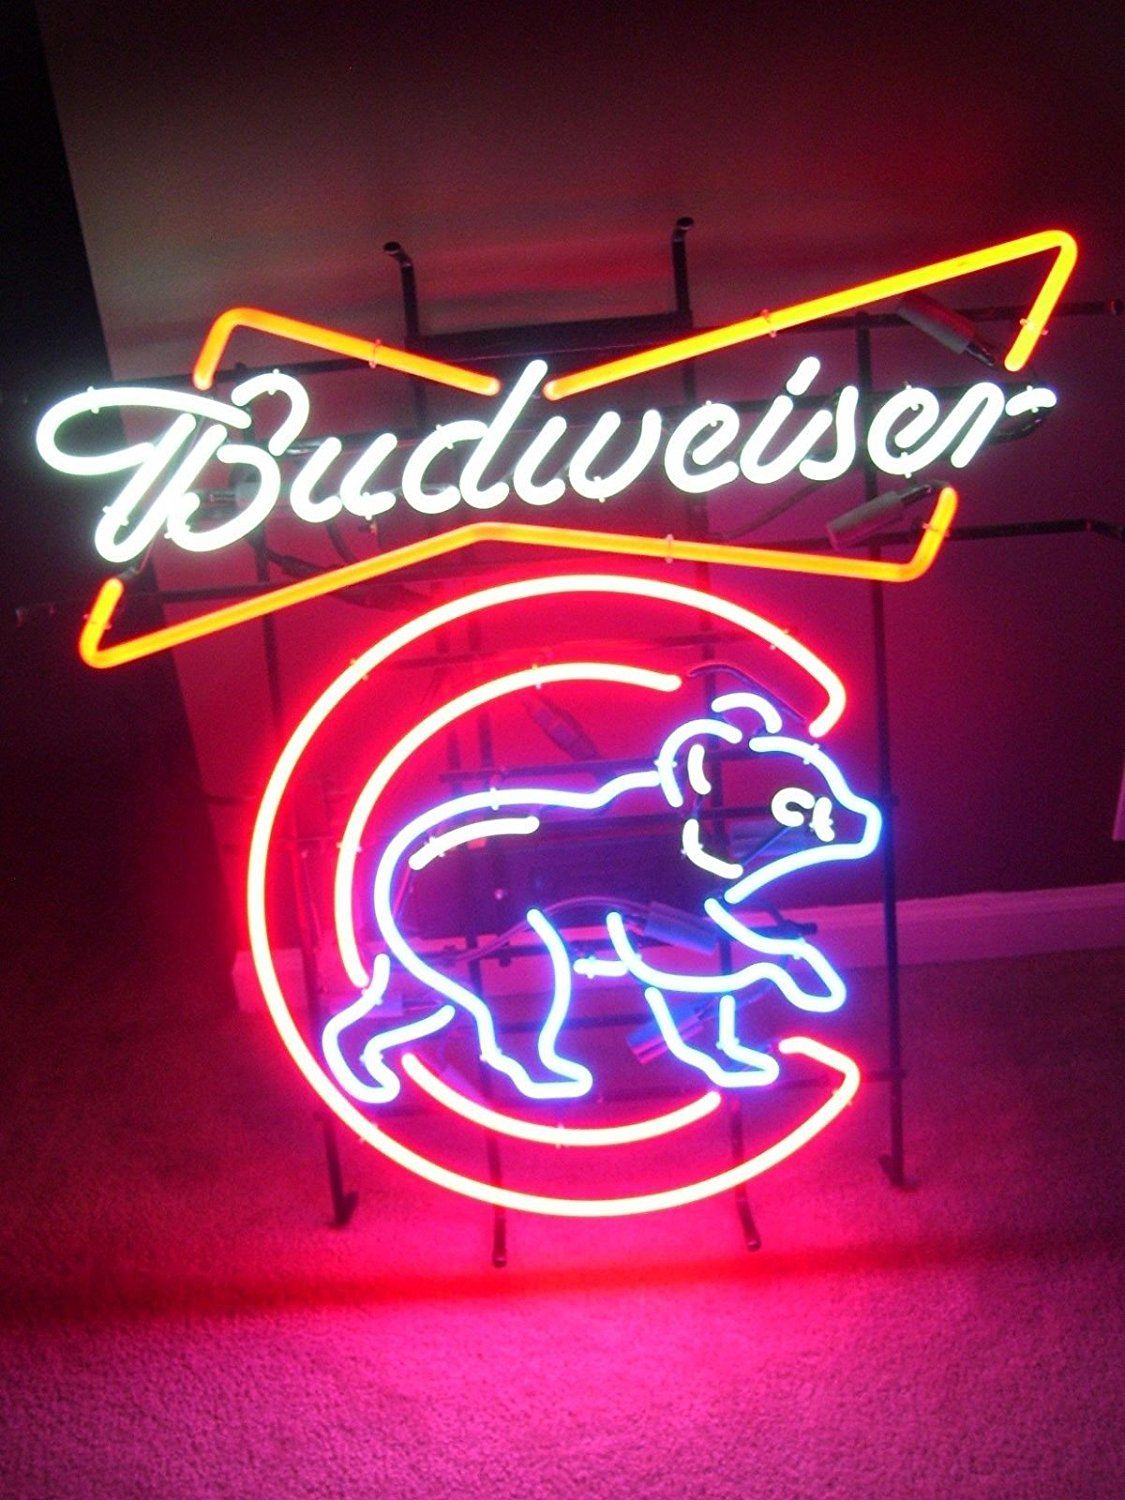 New Minnesota Vikings Budweiser Beer Bar Neon Light Sign 24"x20"